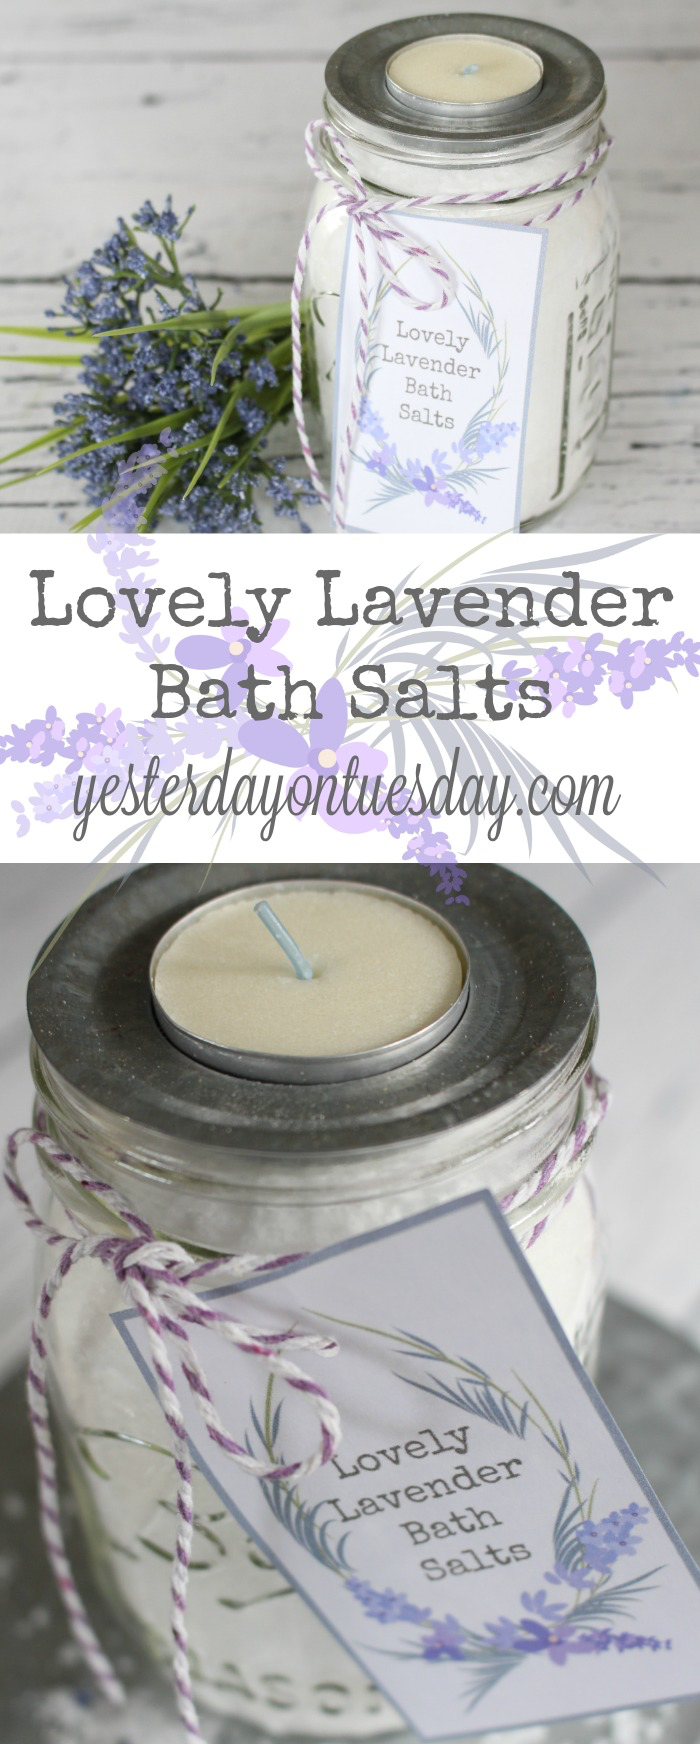 Lovely Lavender Bath Salts